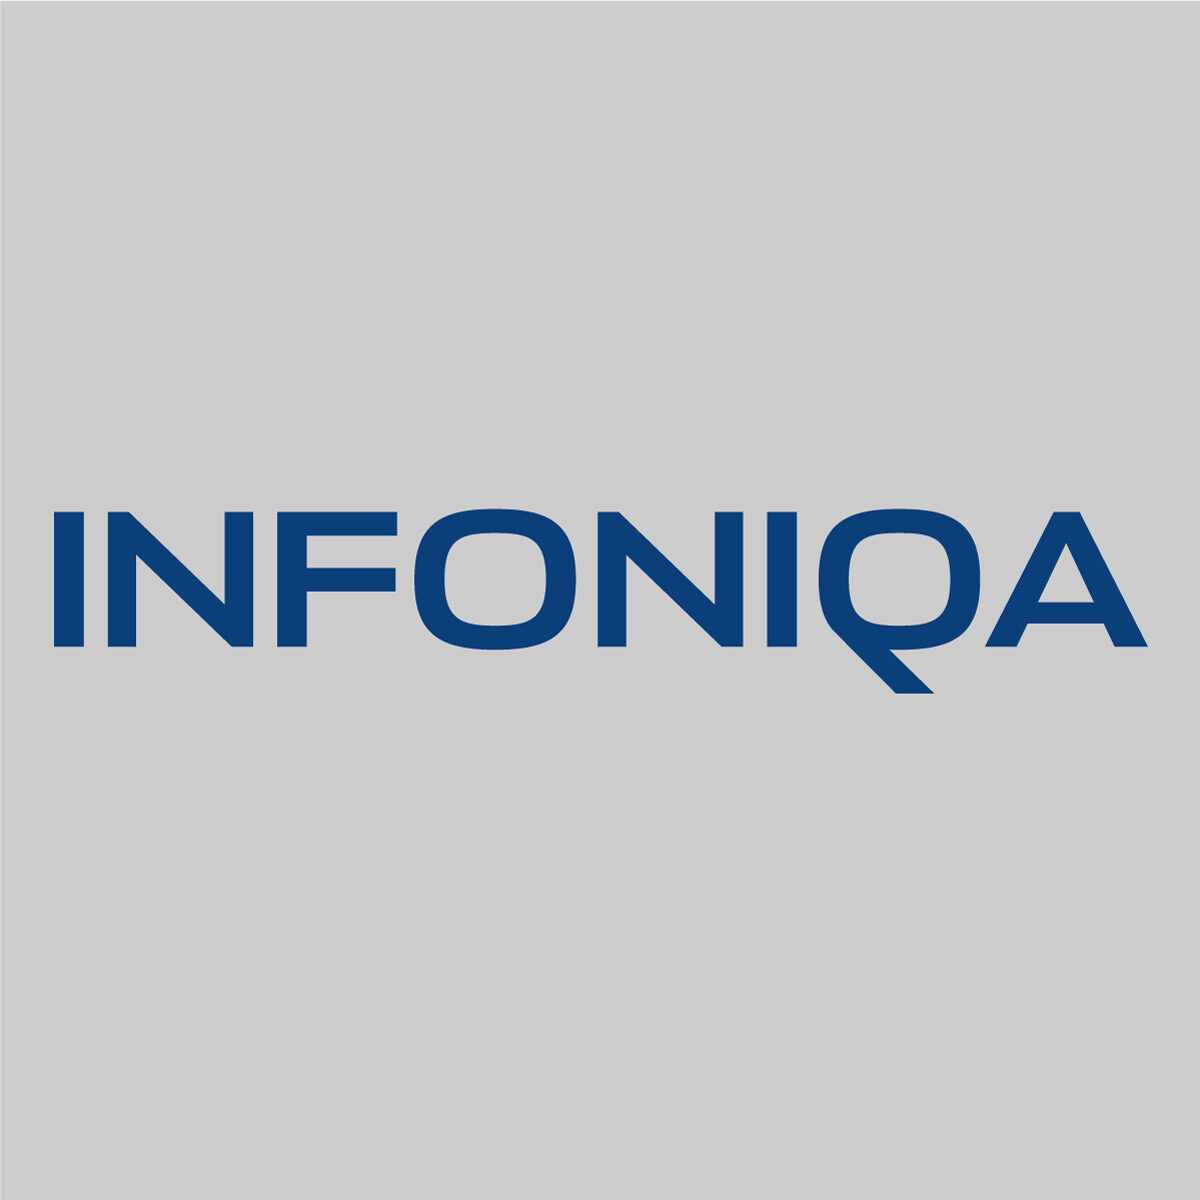 infoniqa-logo